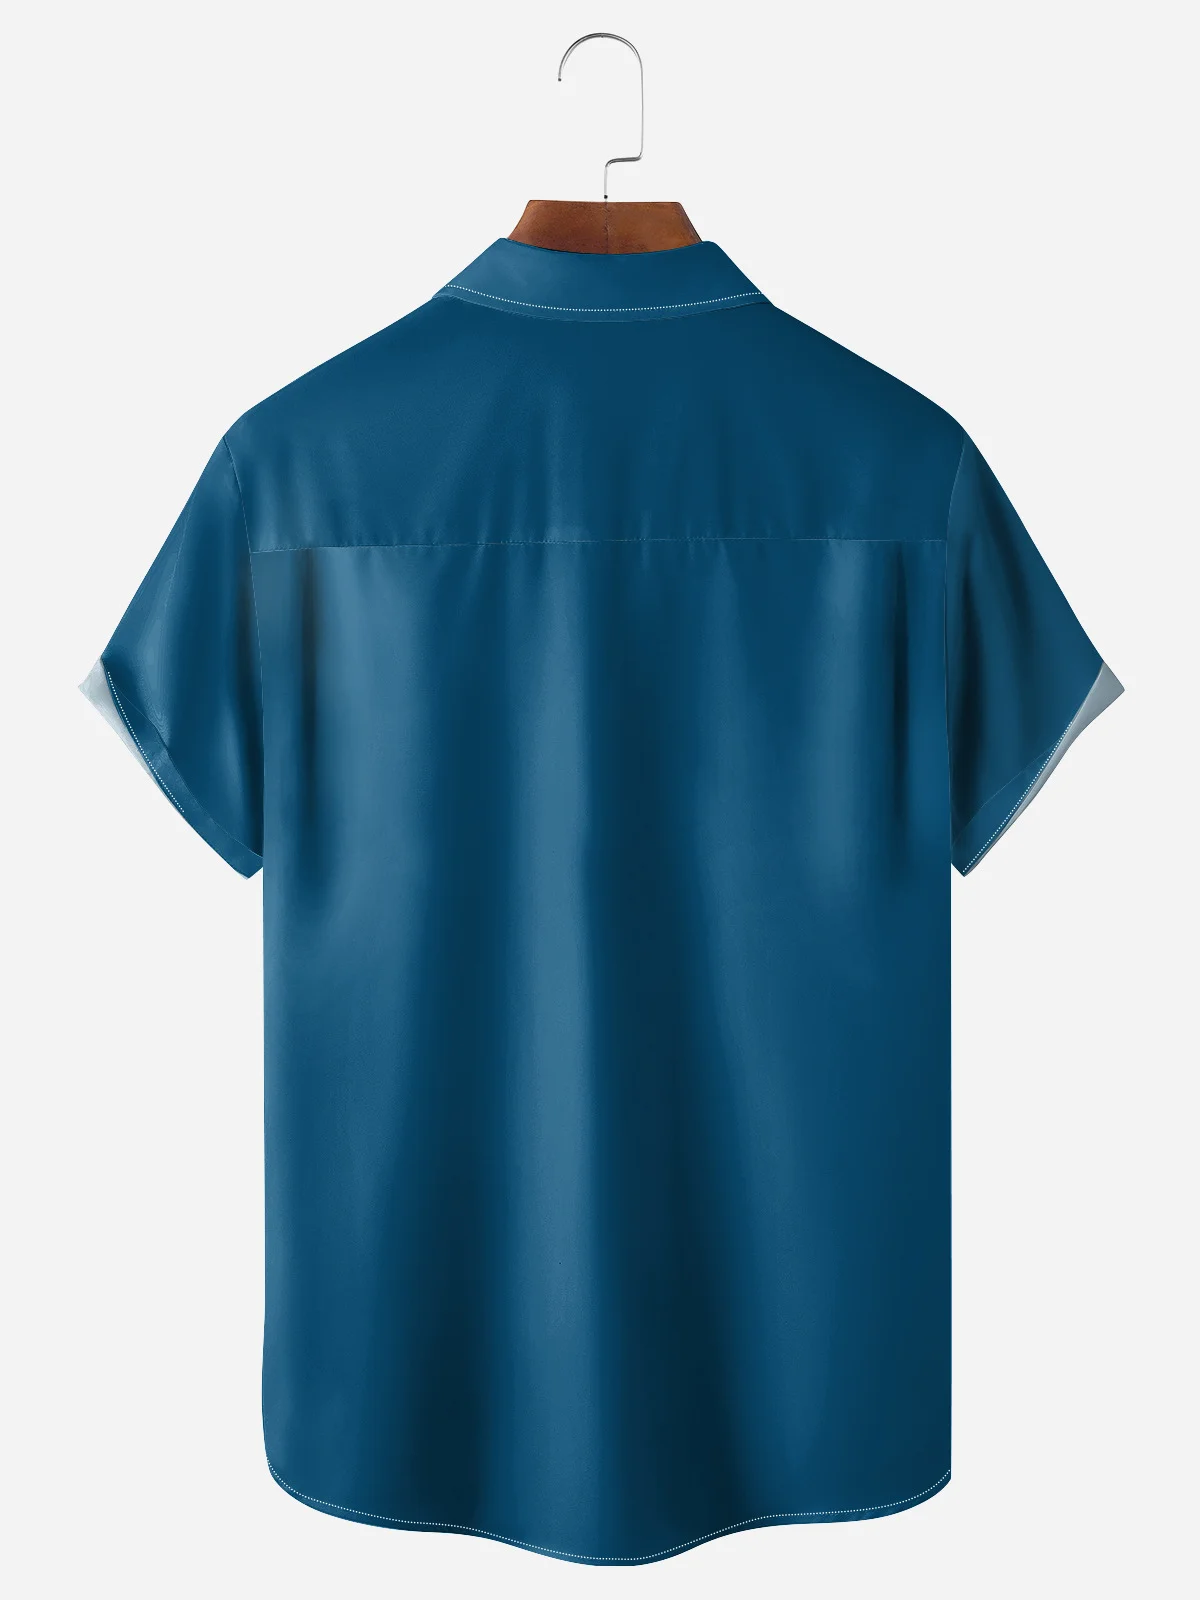 Surfing Shark Chest Pocket Short Sleeve Bowling Shirt